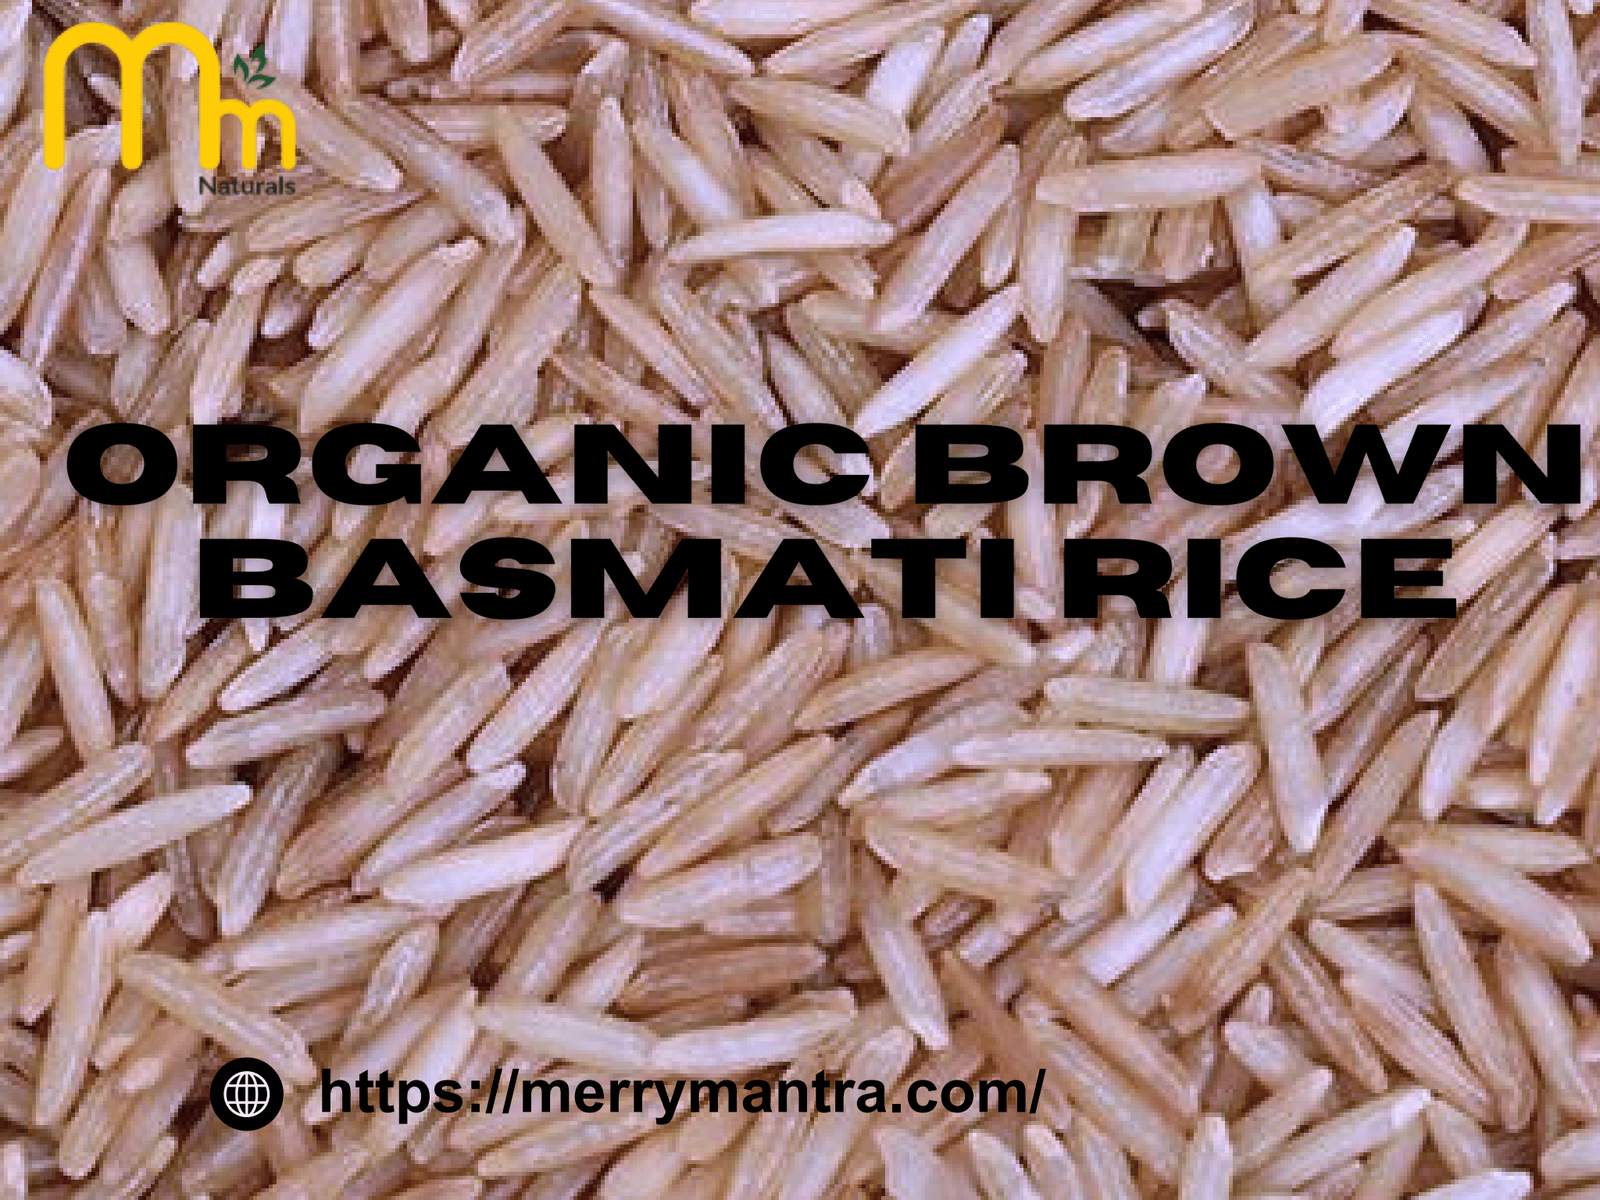 Dropbox - Organic Brown Basmati rice.pdf - Simplify your life